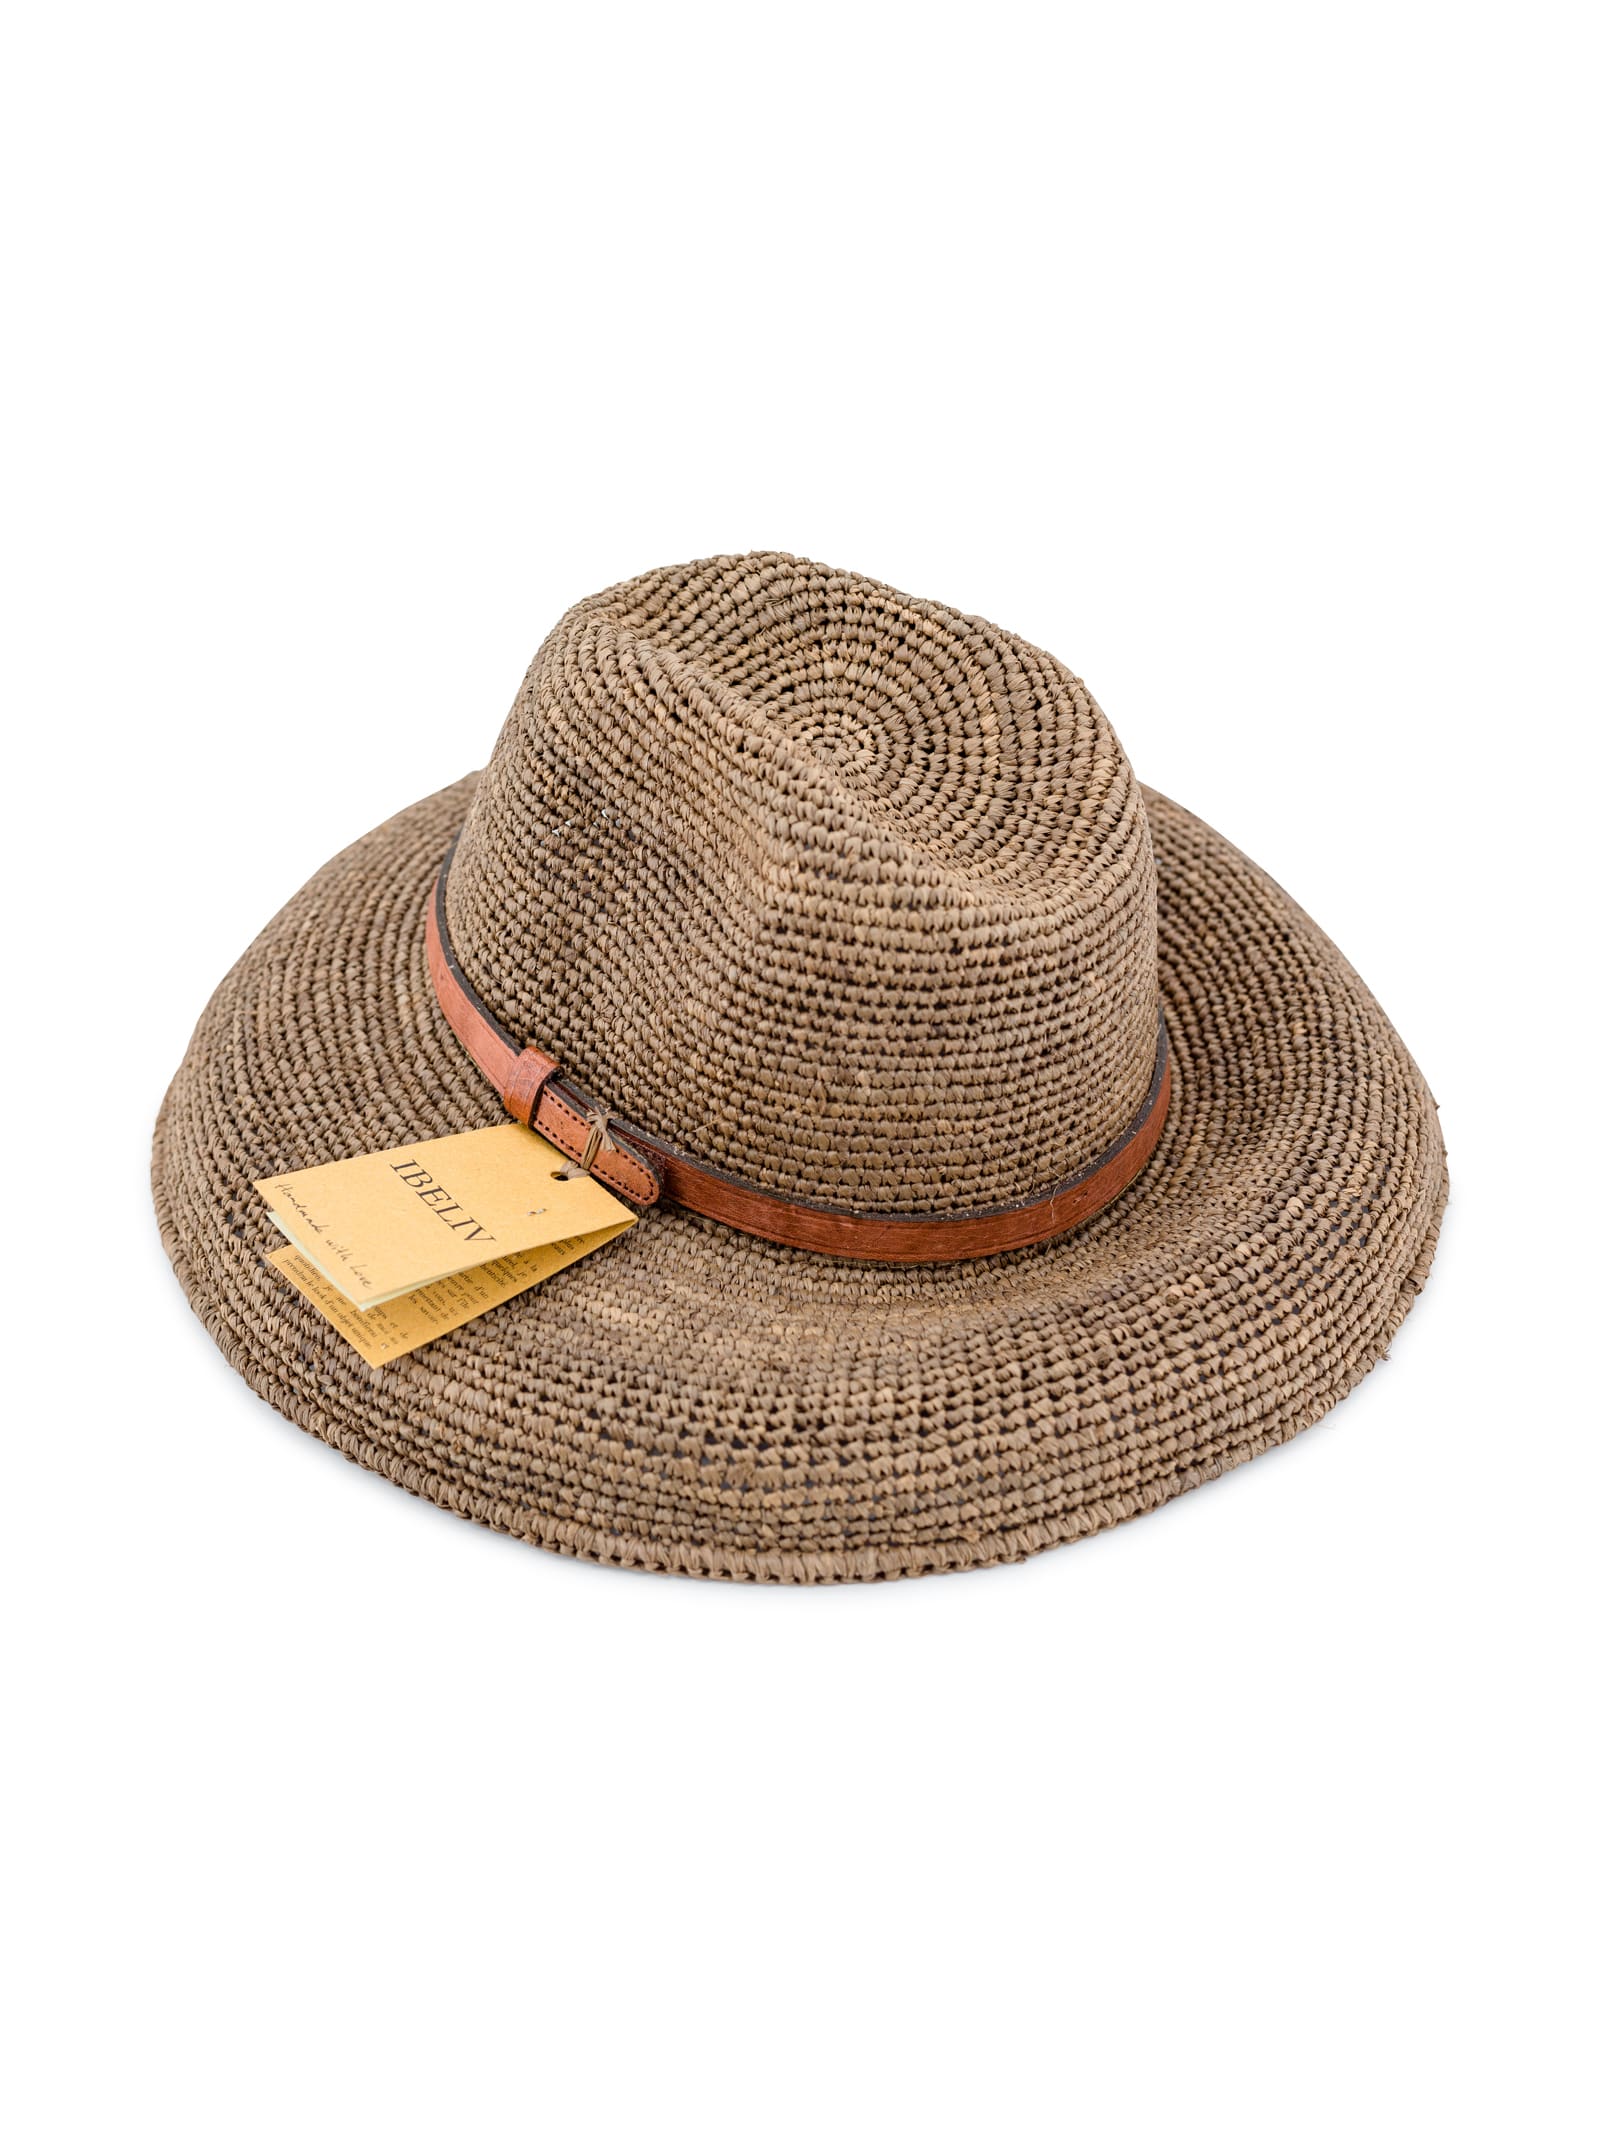 Ibeliv Safari Woven Straw Hat In Tea